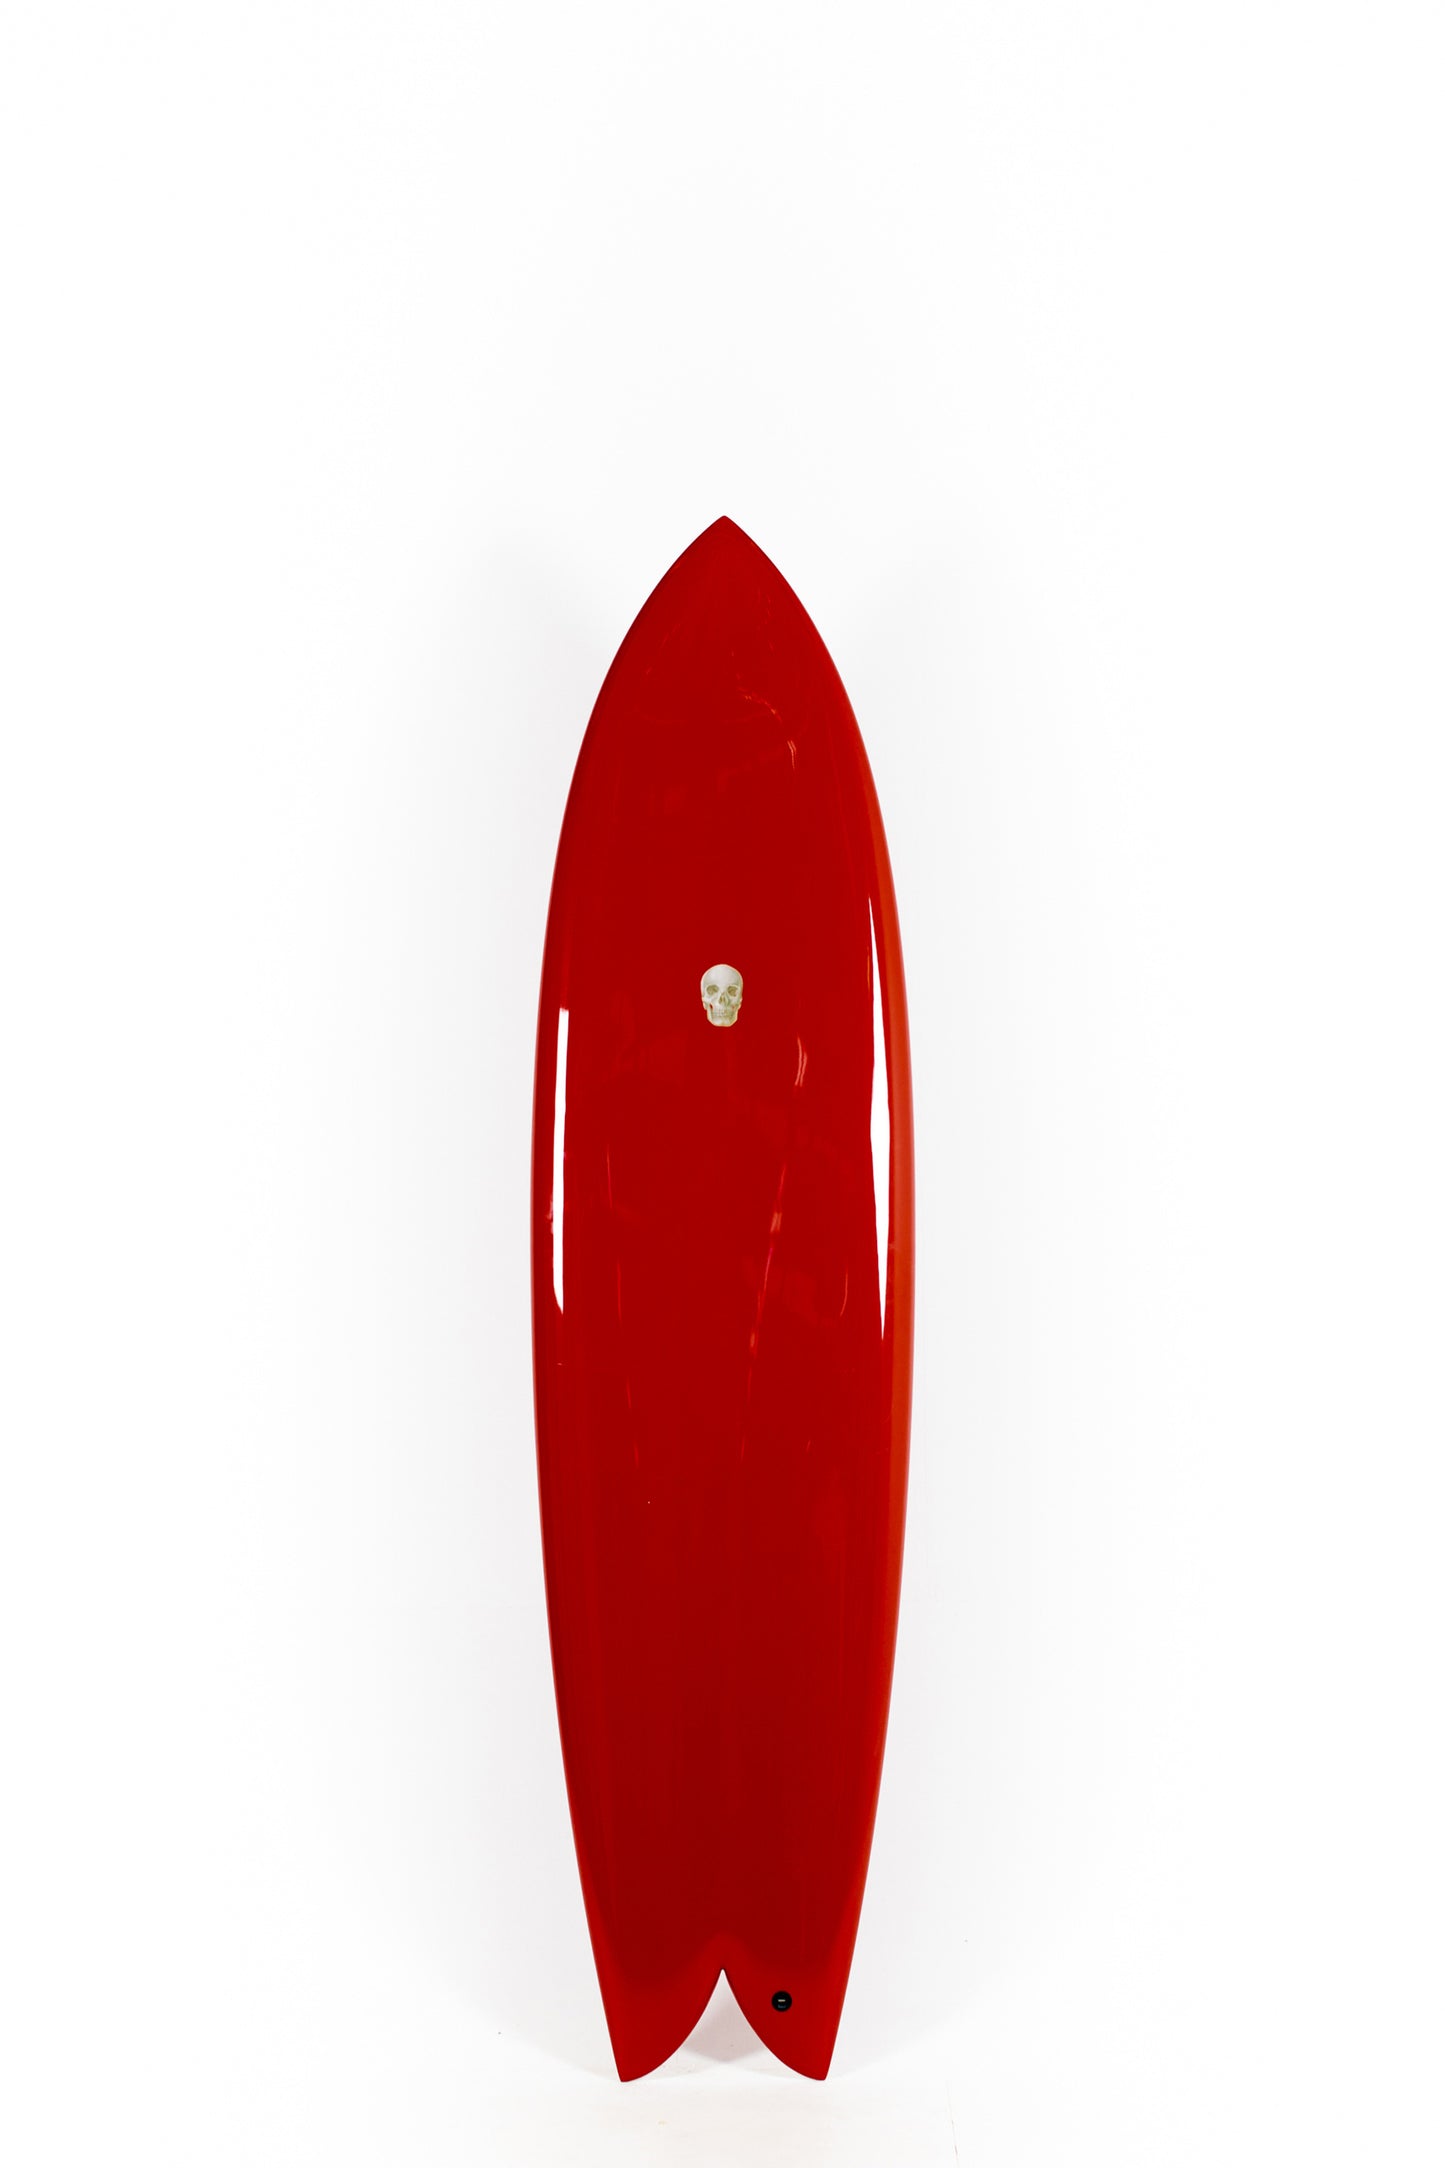 Pukas Surf Shop - Christenson Surfboards - LONG PHISH - 7'0" x 21 x 2 5/8 - CX03290